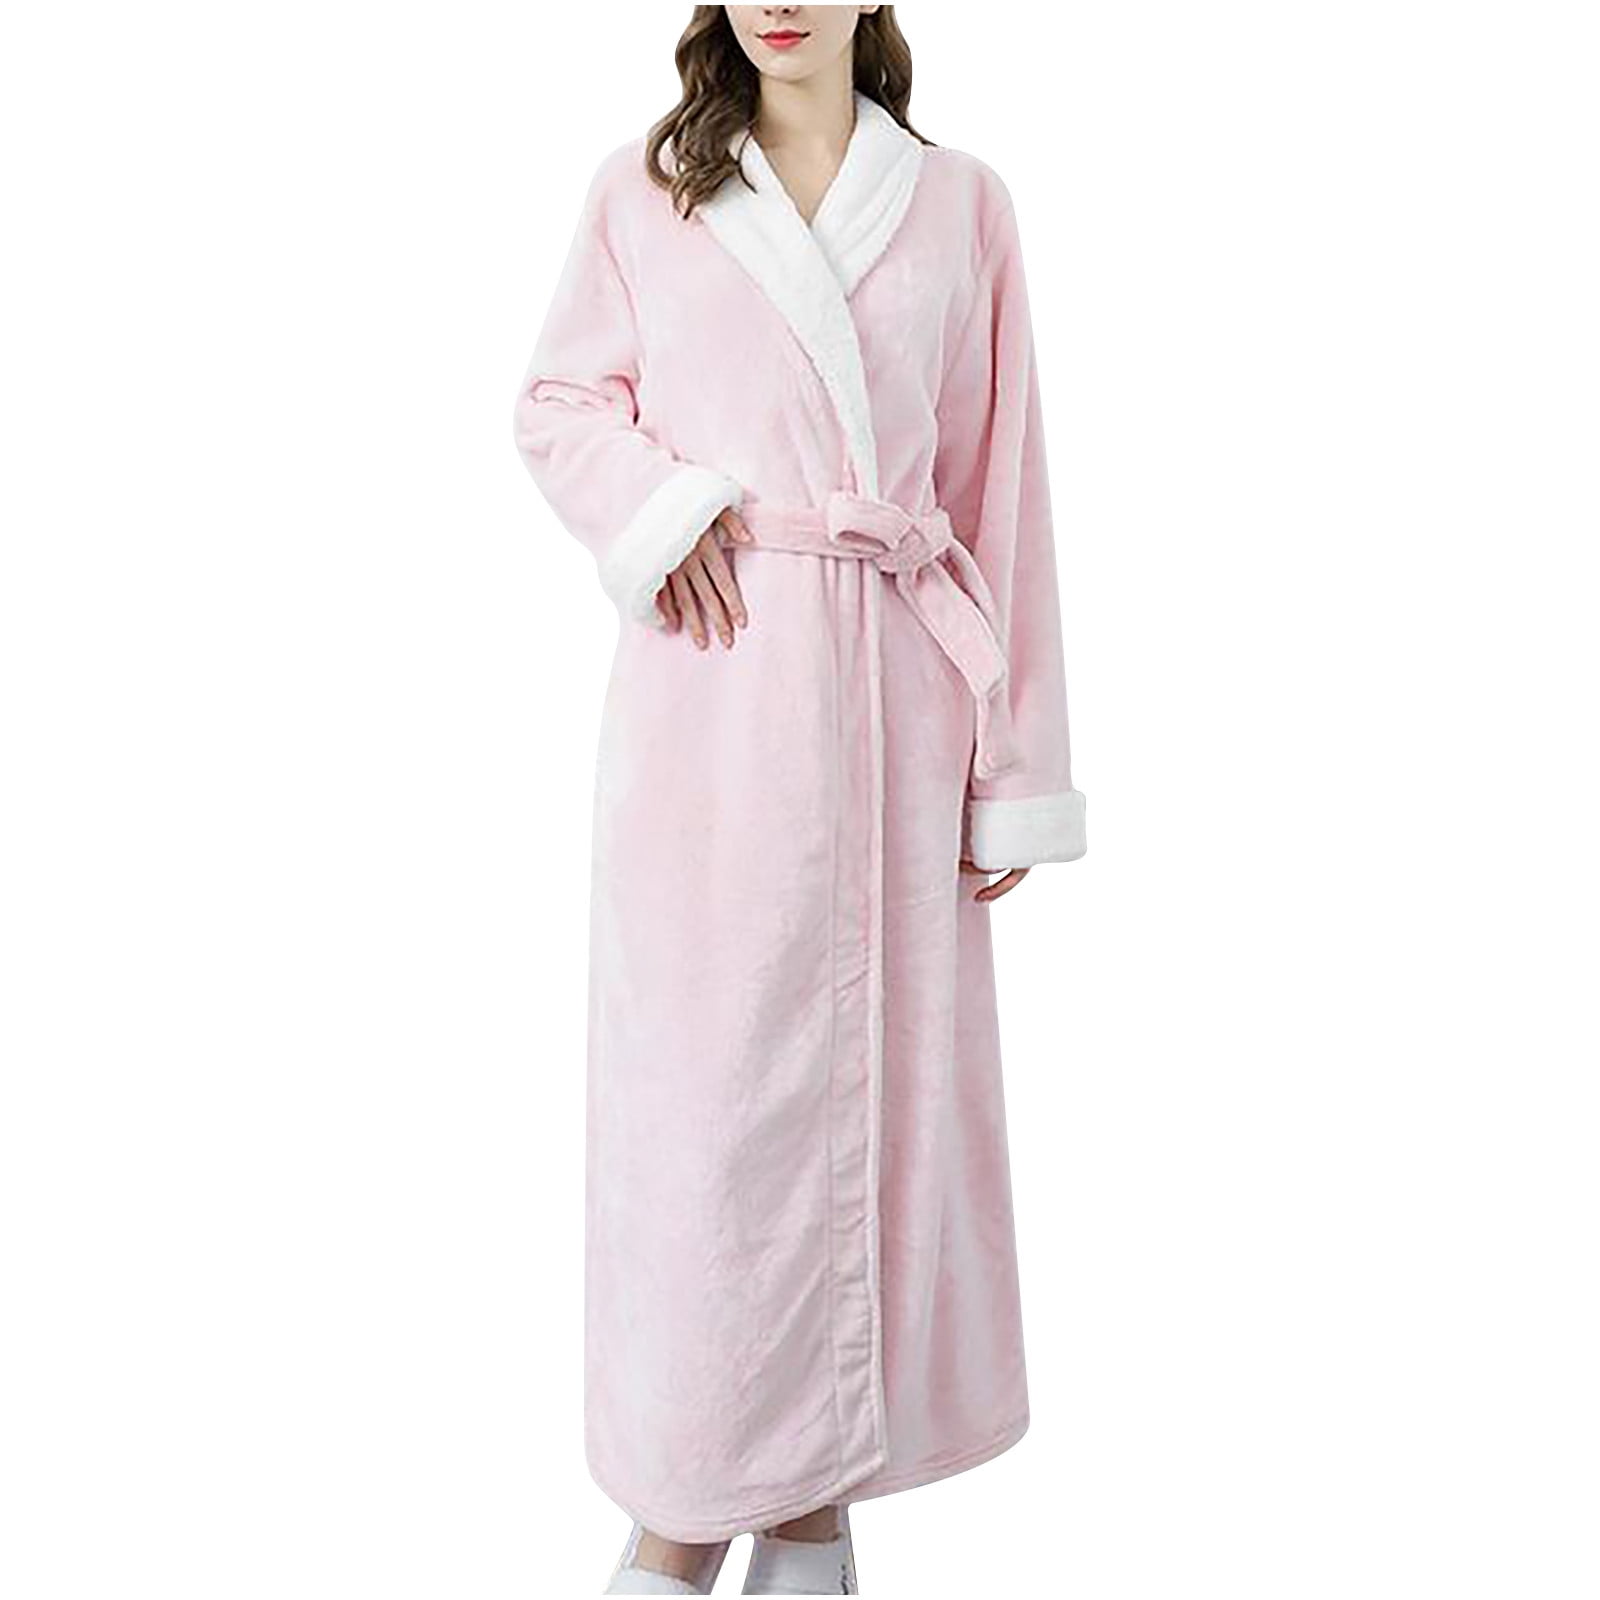 HAPIMO Savings Women's Robes Soft Sleepwear Cotton Plush Robe Warm Fleece  Bathrobe Ankle Length Long Winter Bath Robes Nightgown Pink M 